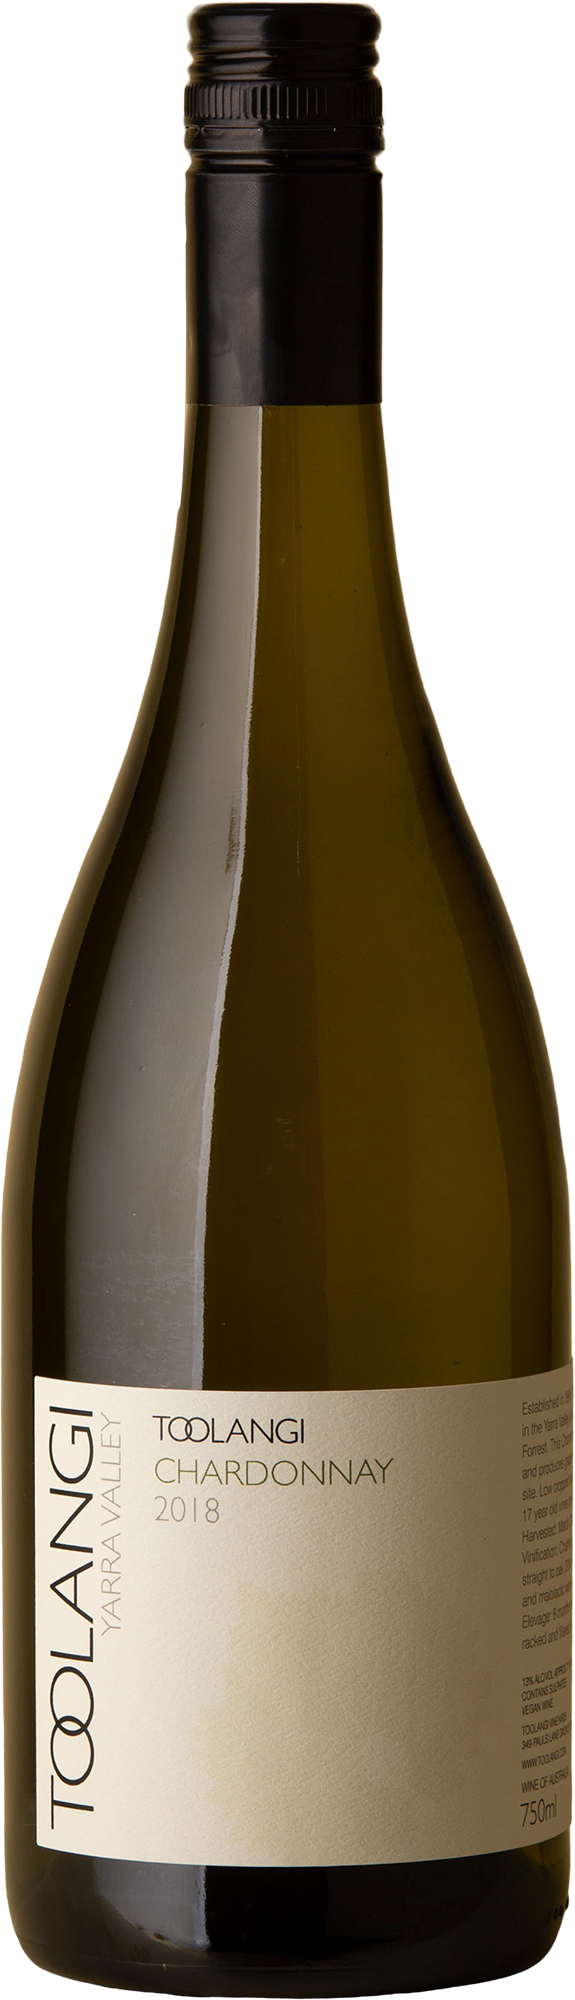 Toolangi - Chardonnay 2018 White Wine